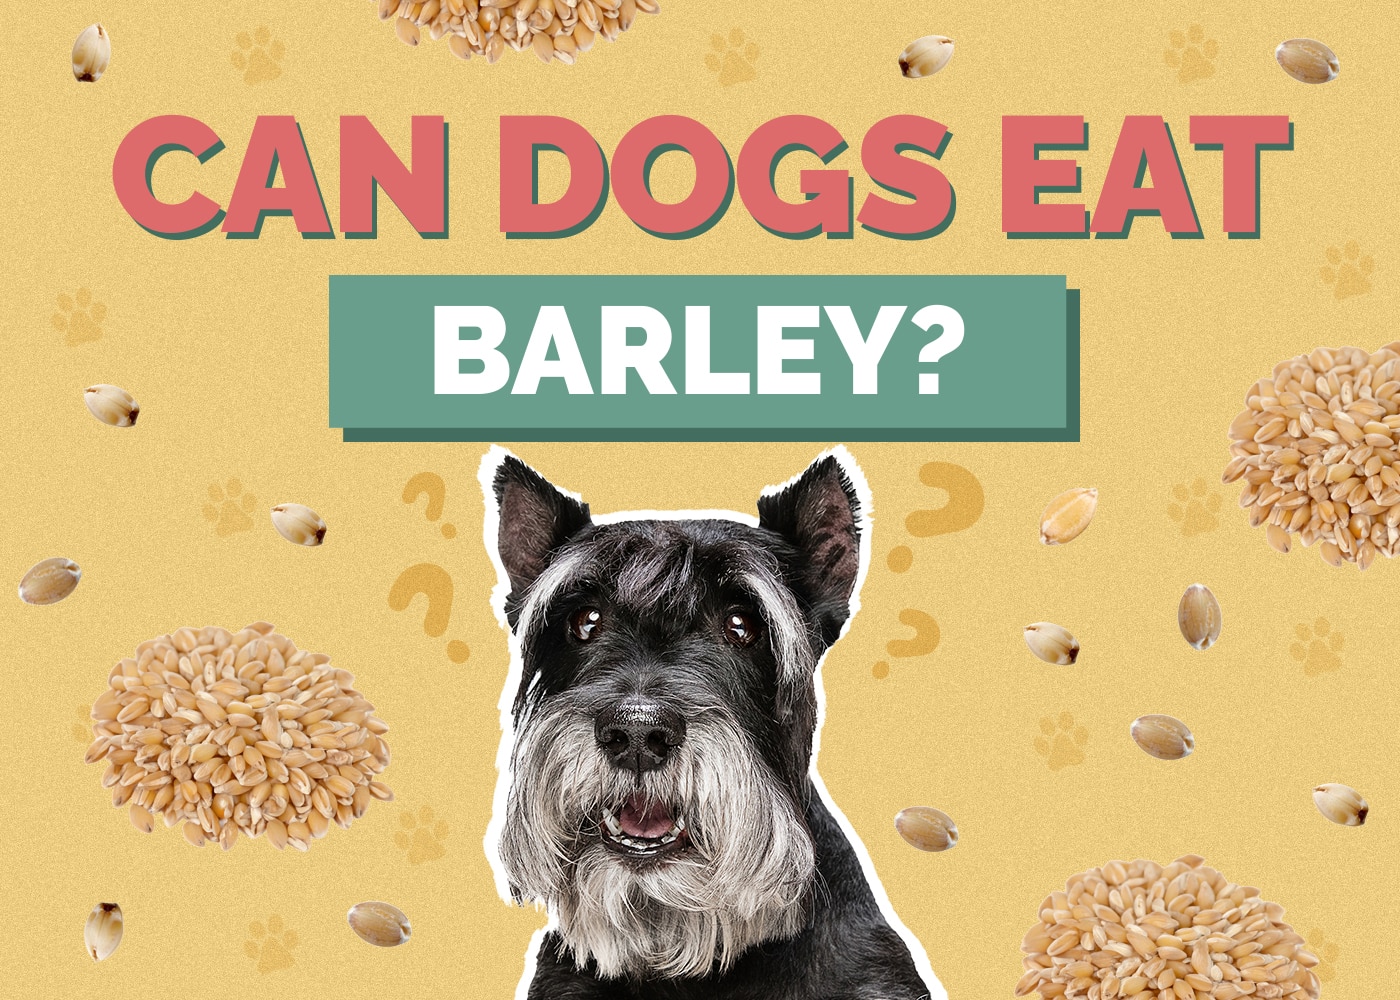 Can Dog Eat barley